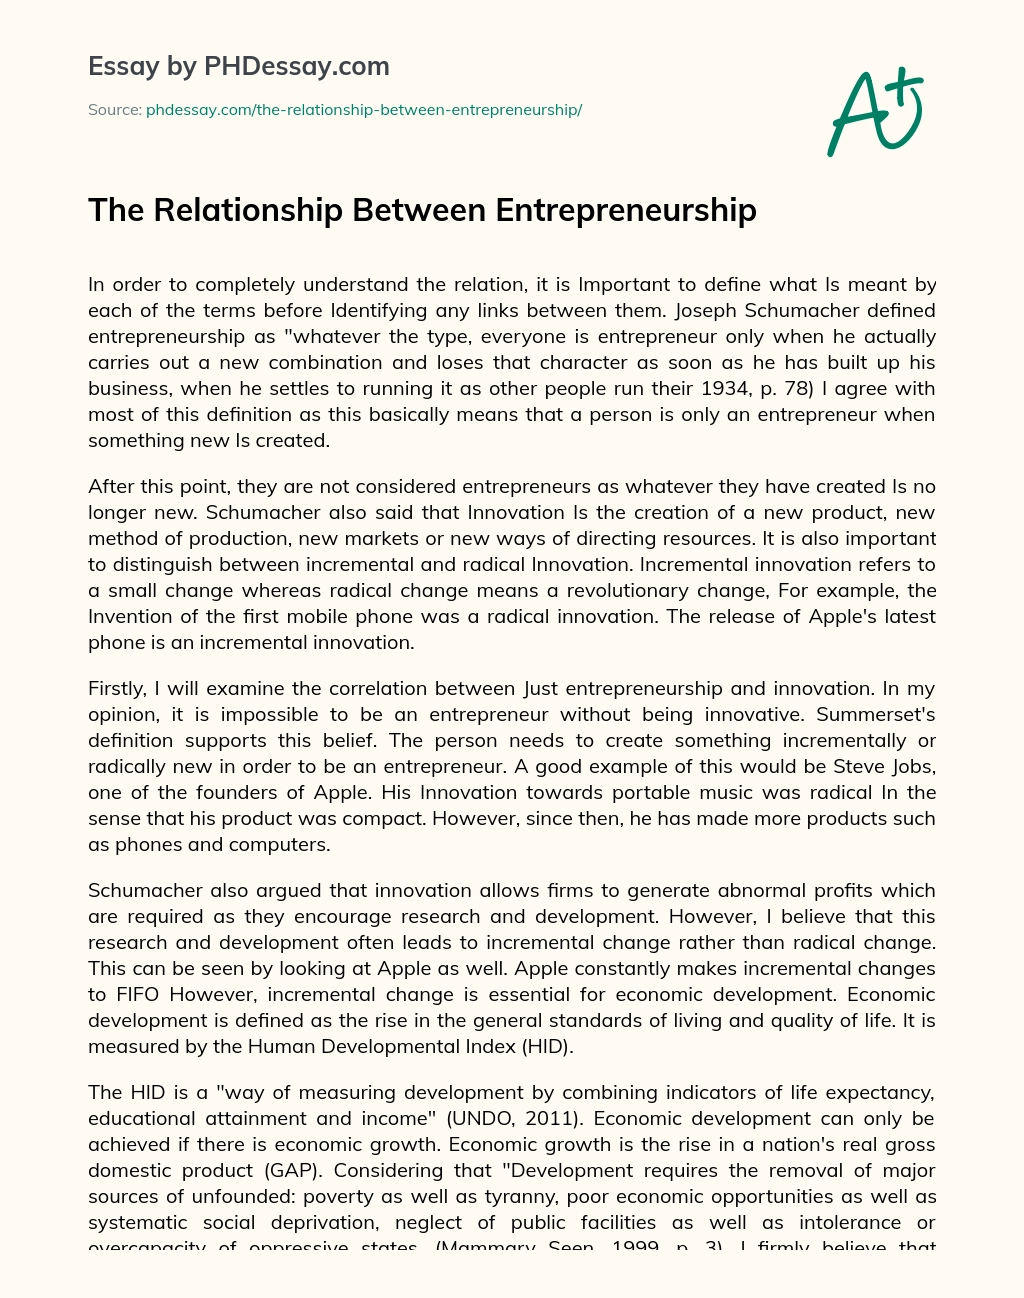 The Relationship Between Entrepreneurship essay